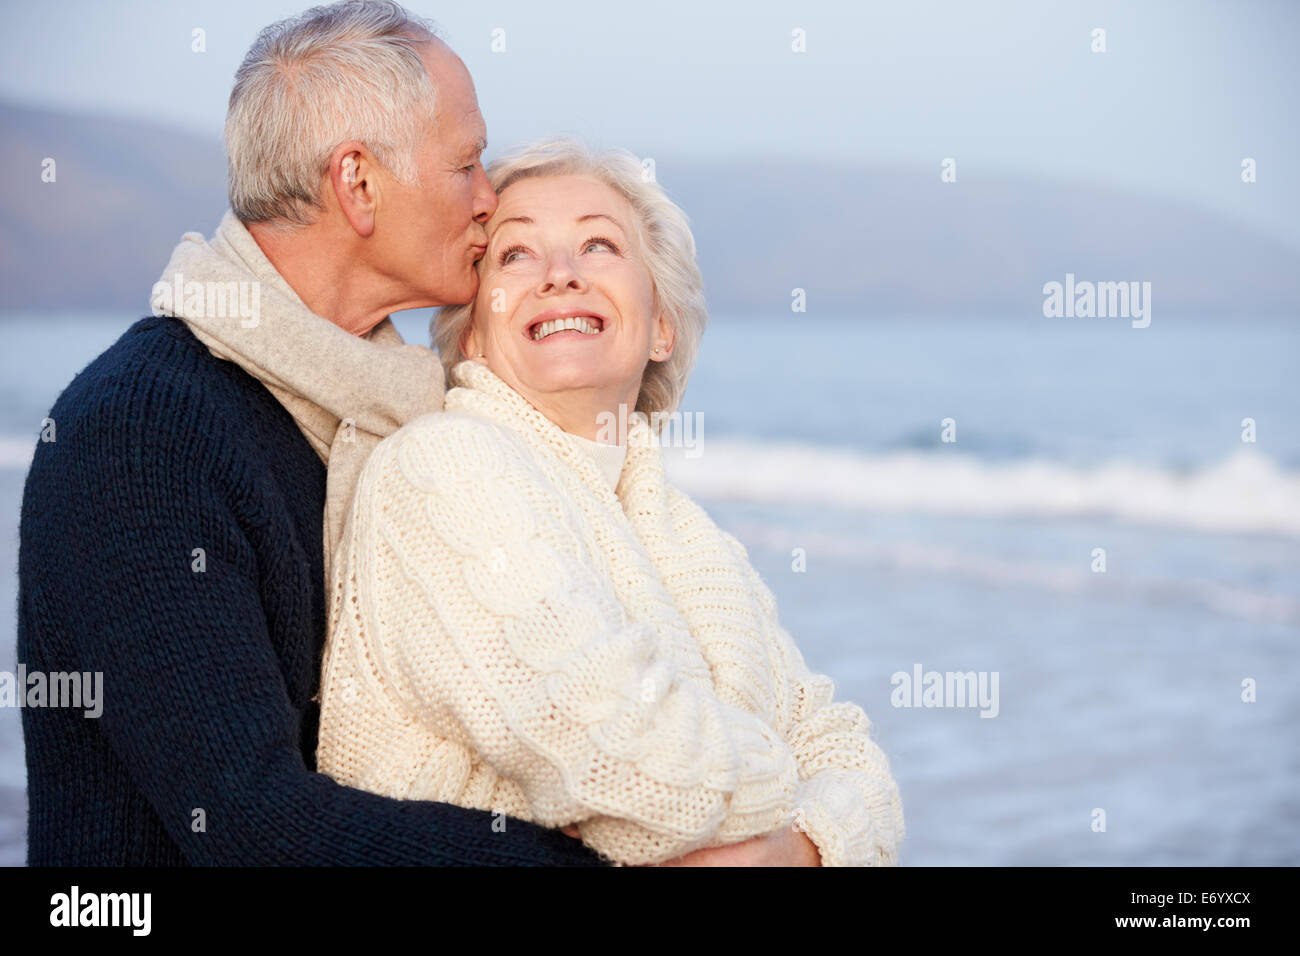 Romantische älteres Paar am Winter-Strand Stockfoto